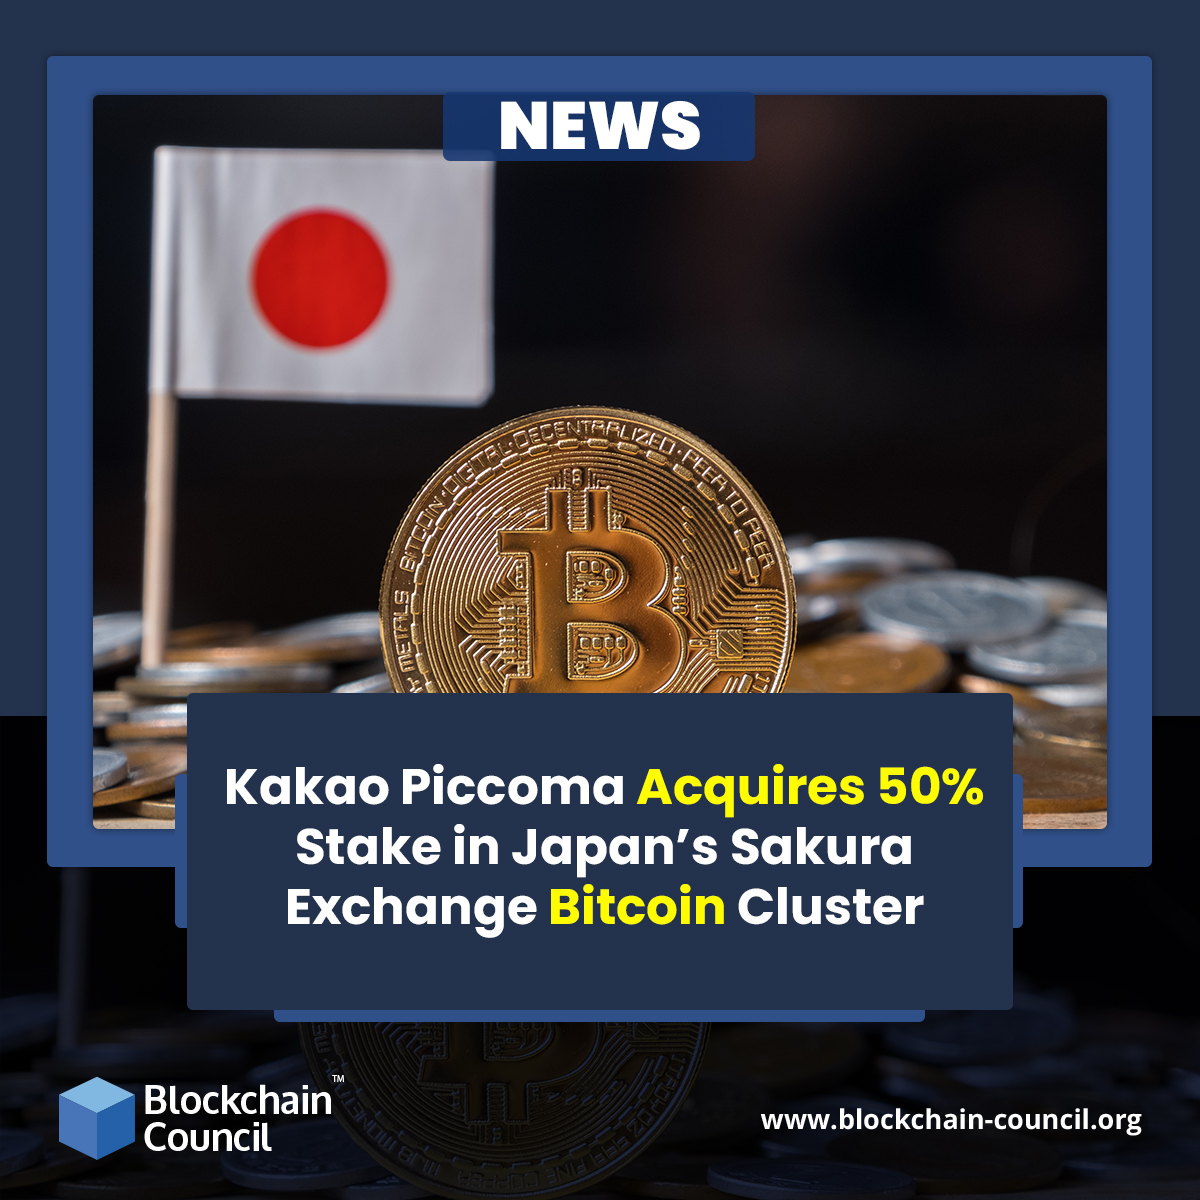 Kakao Piccoma Acquires 50% Stake in Japan’s Sakura Exchange Bitcoin Cluster